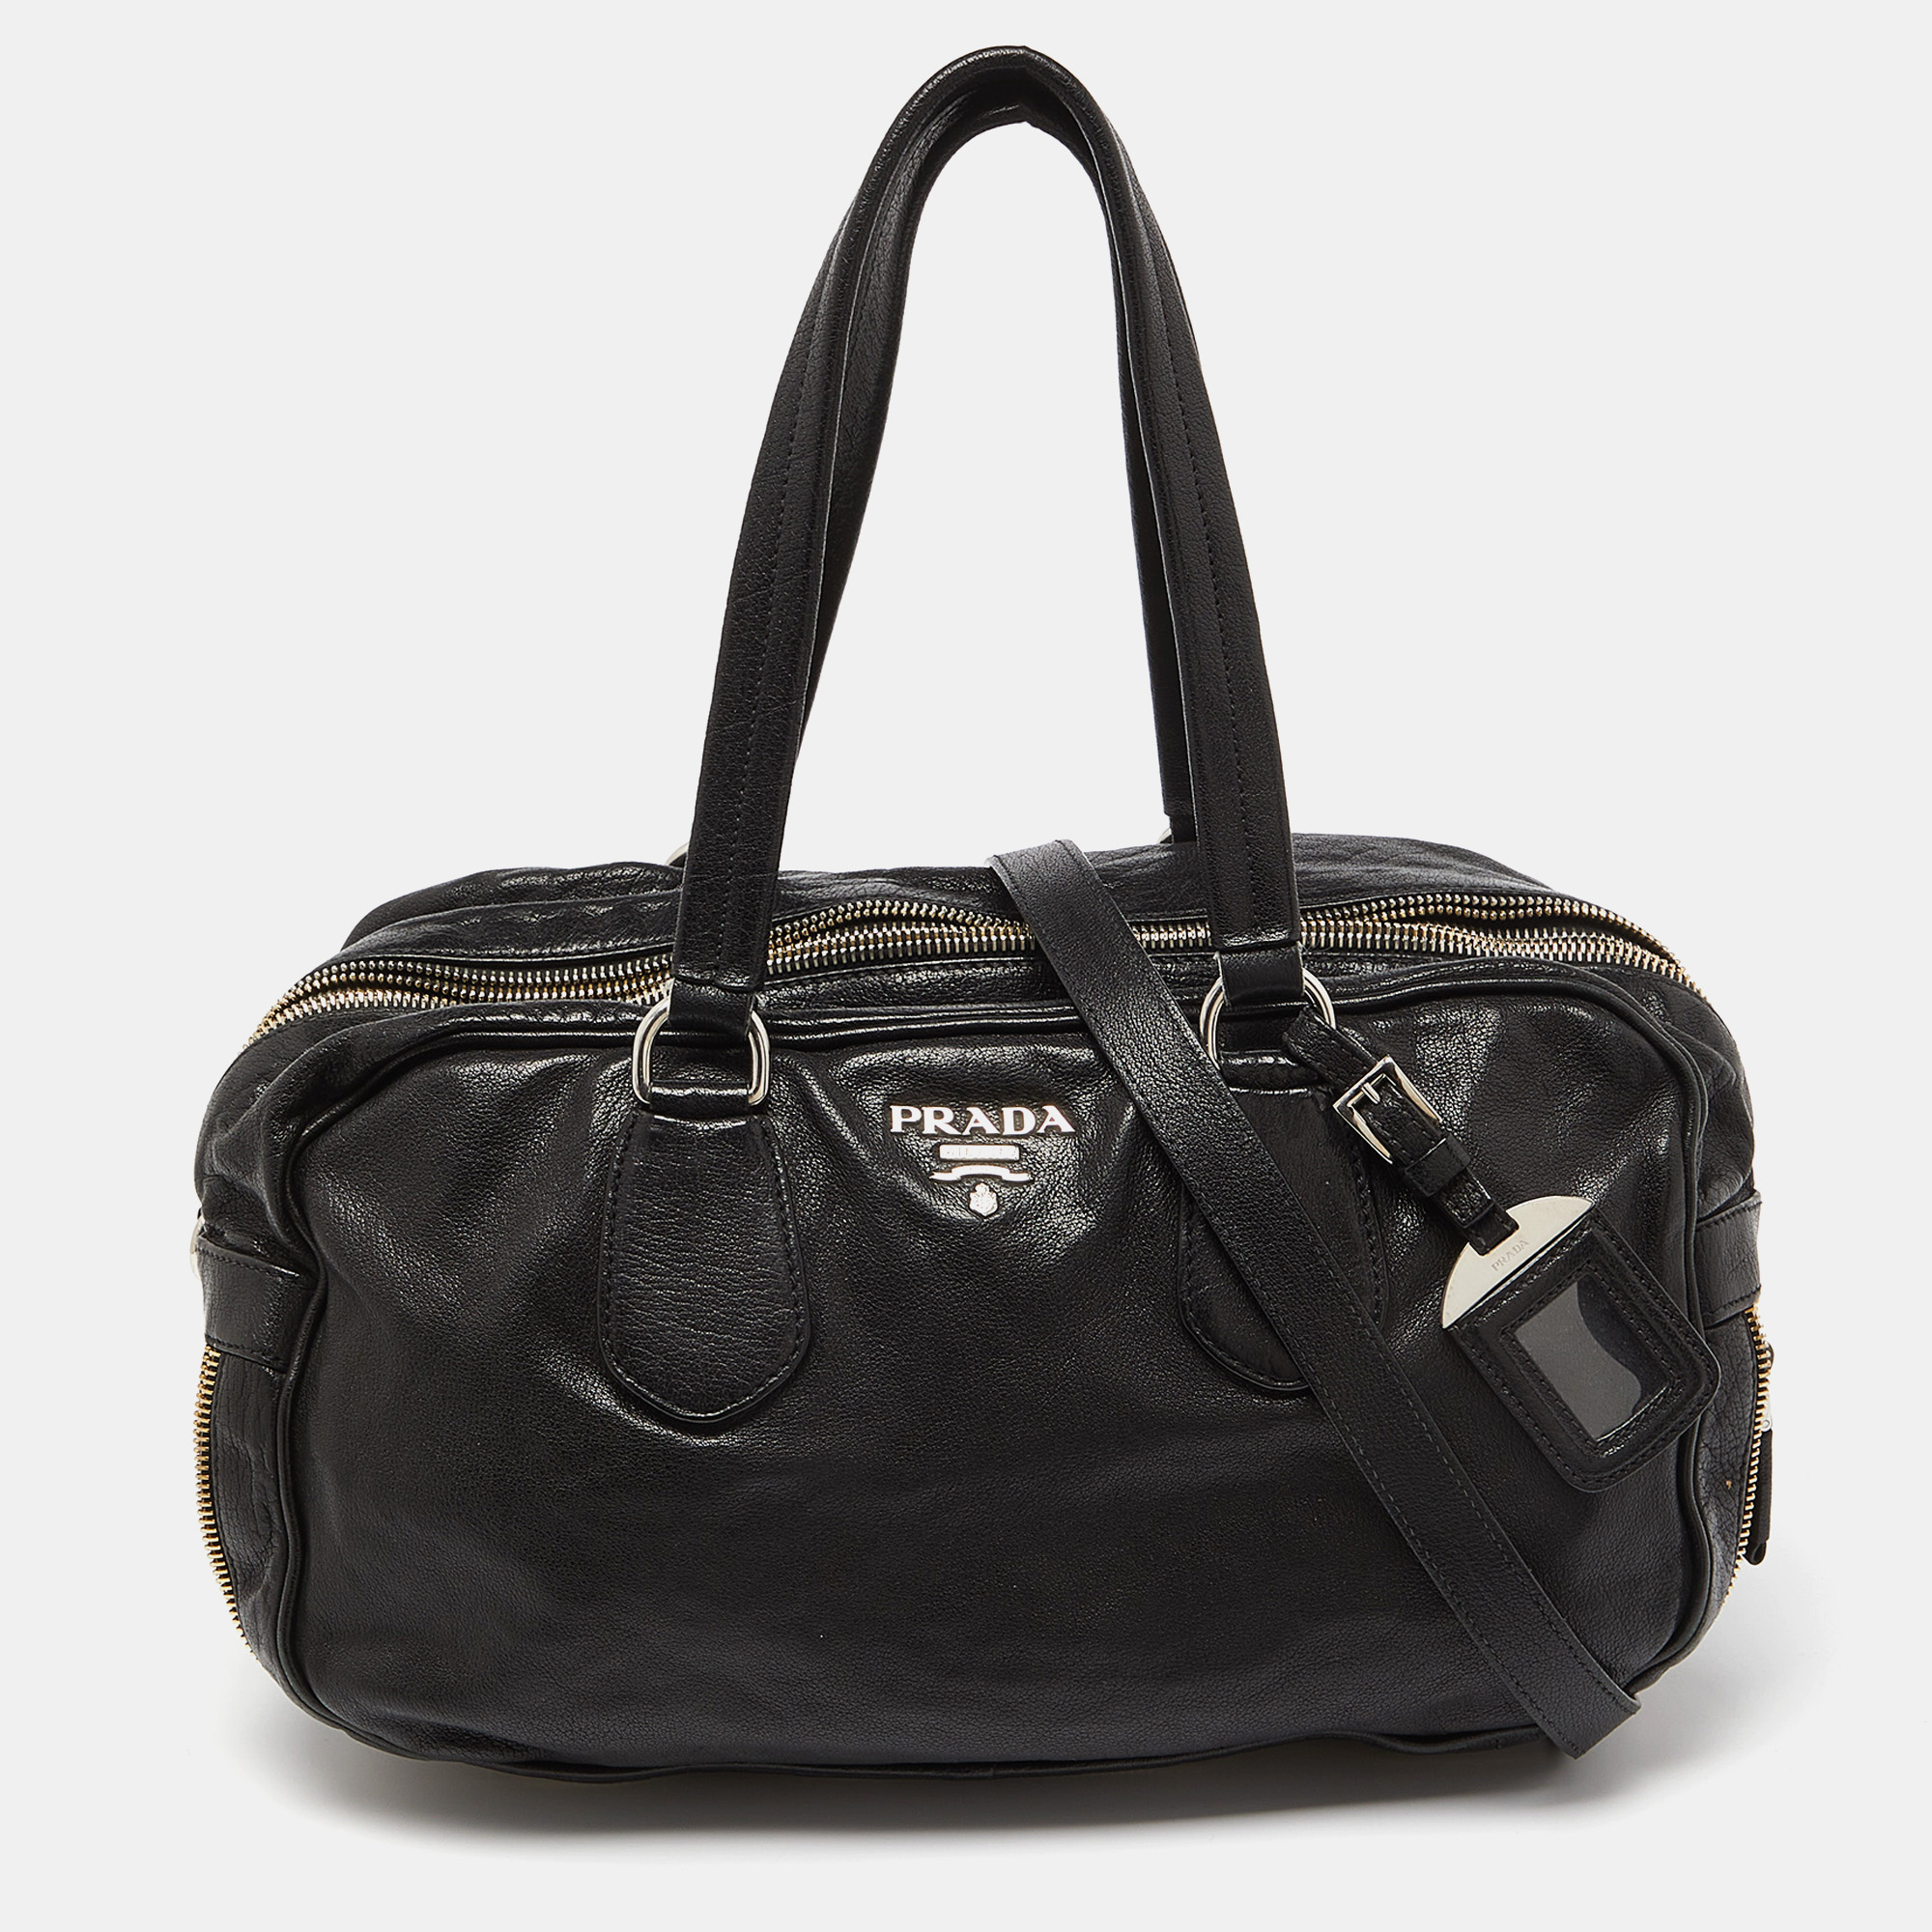 Prada black leather zip detail satchel